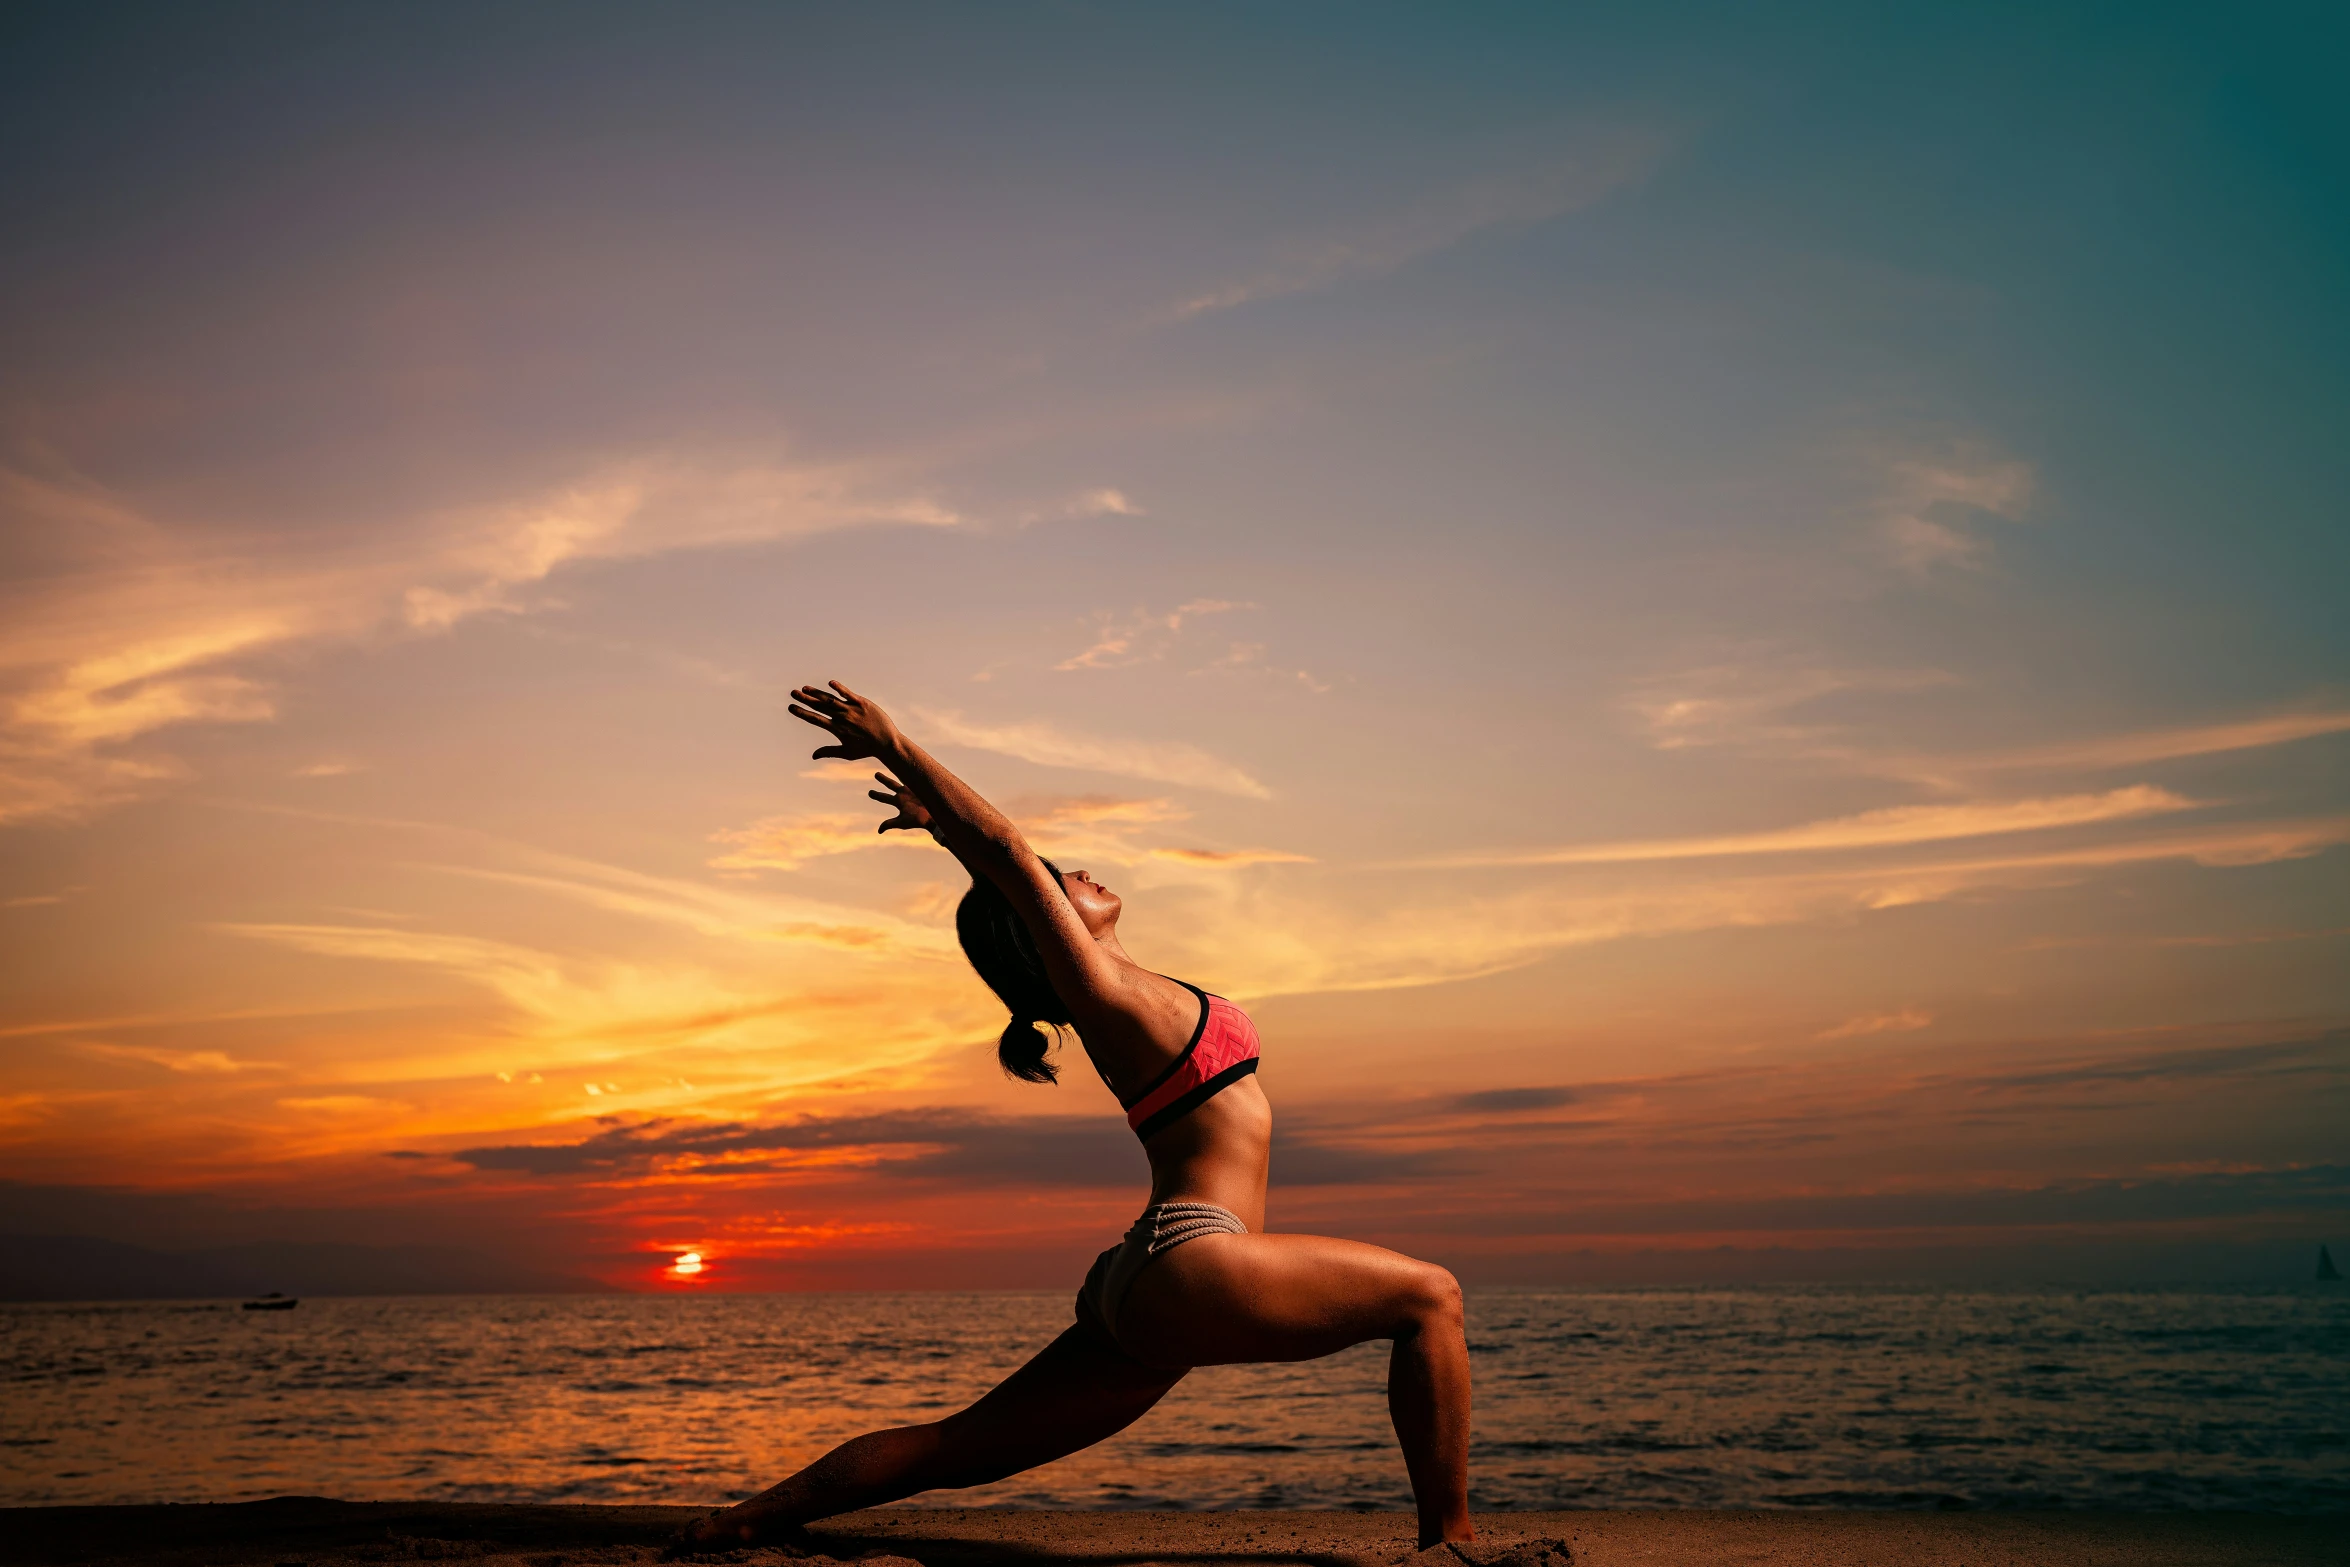 a woman practices yoga on the beach as the sun sets